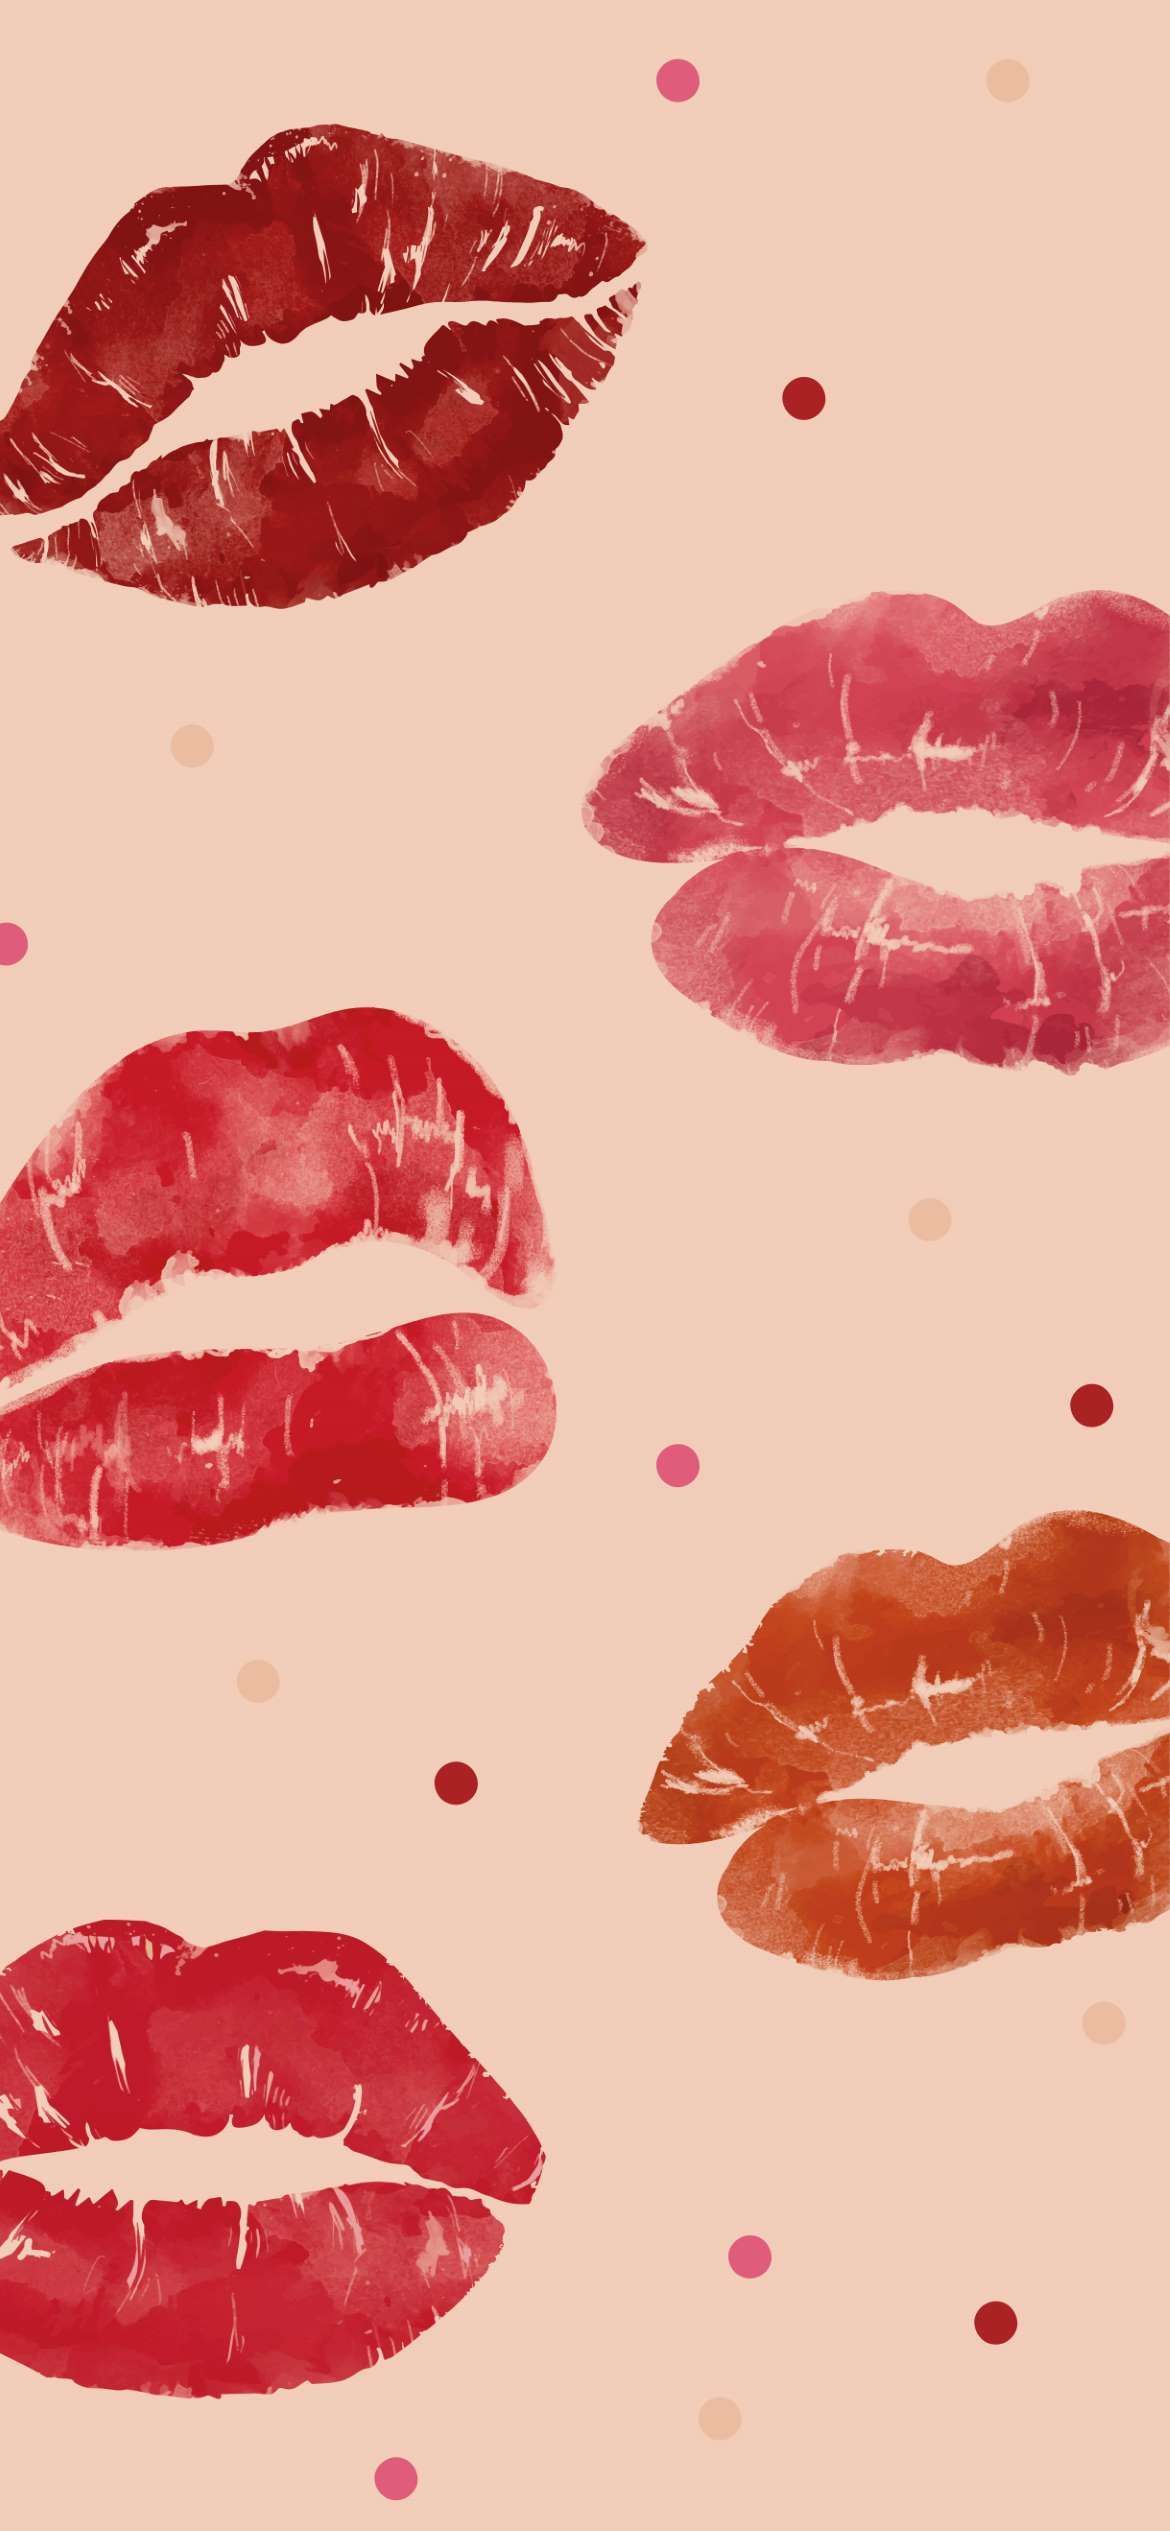 A pattern of lipsticks on pink background - Valentine's Day, lips